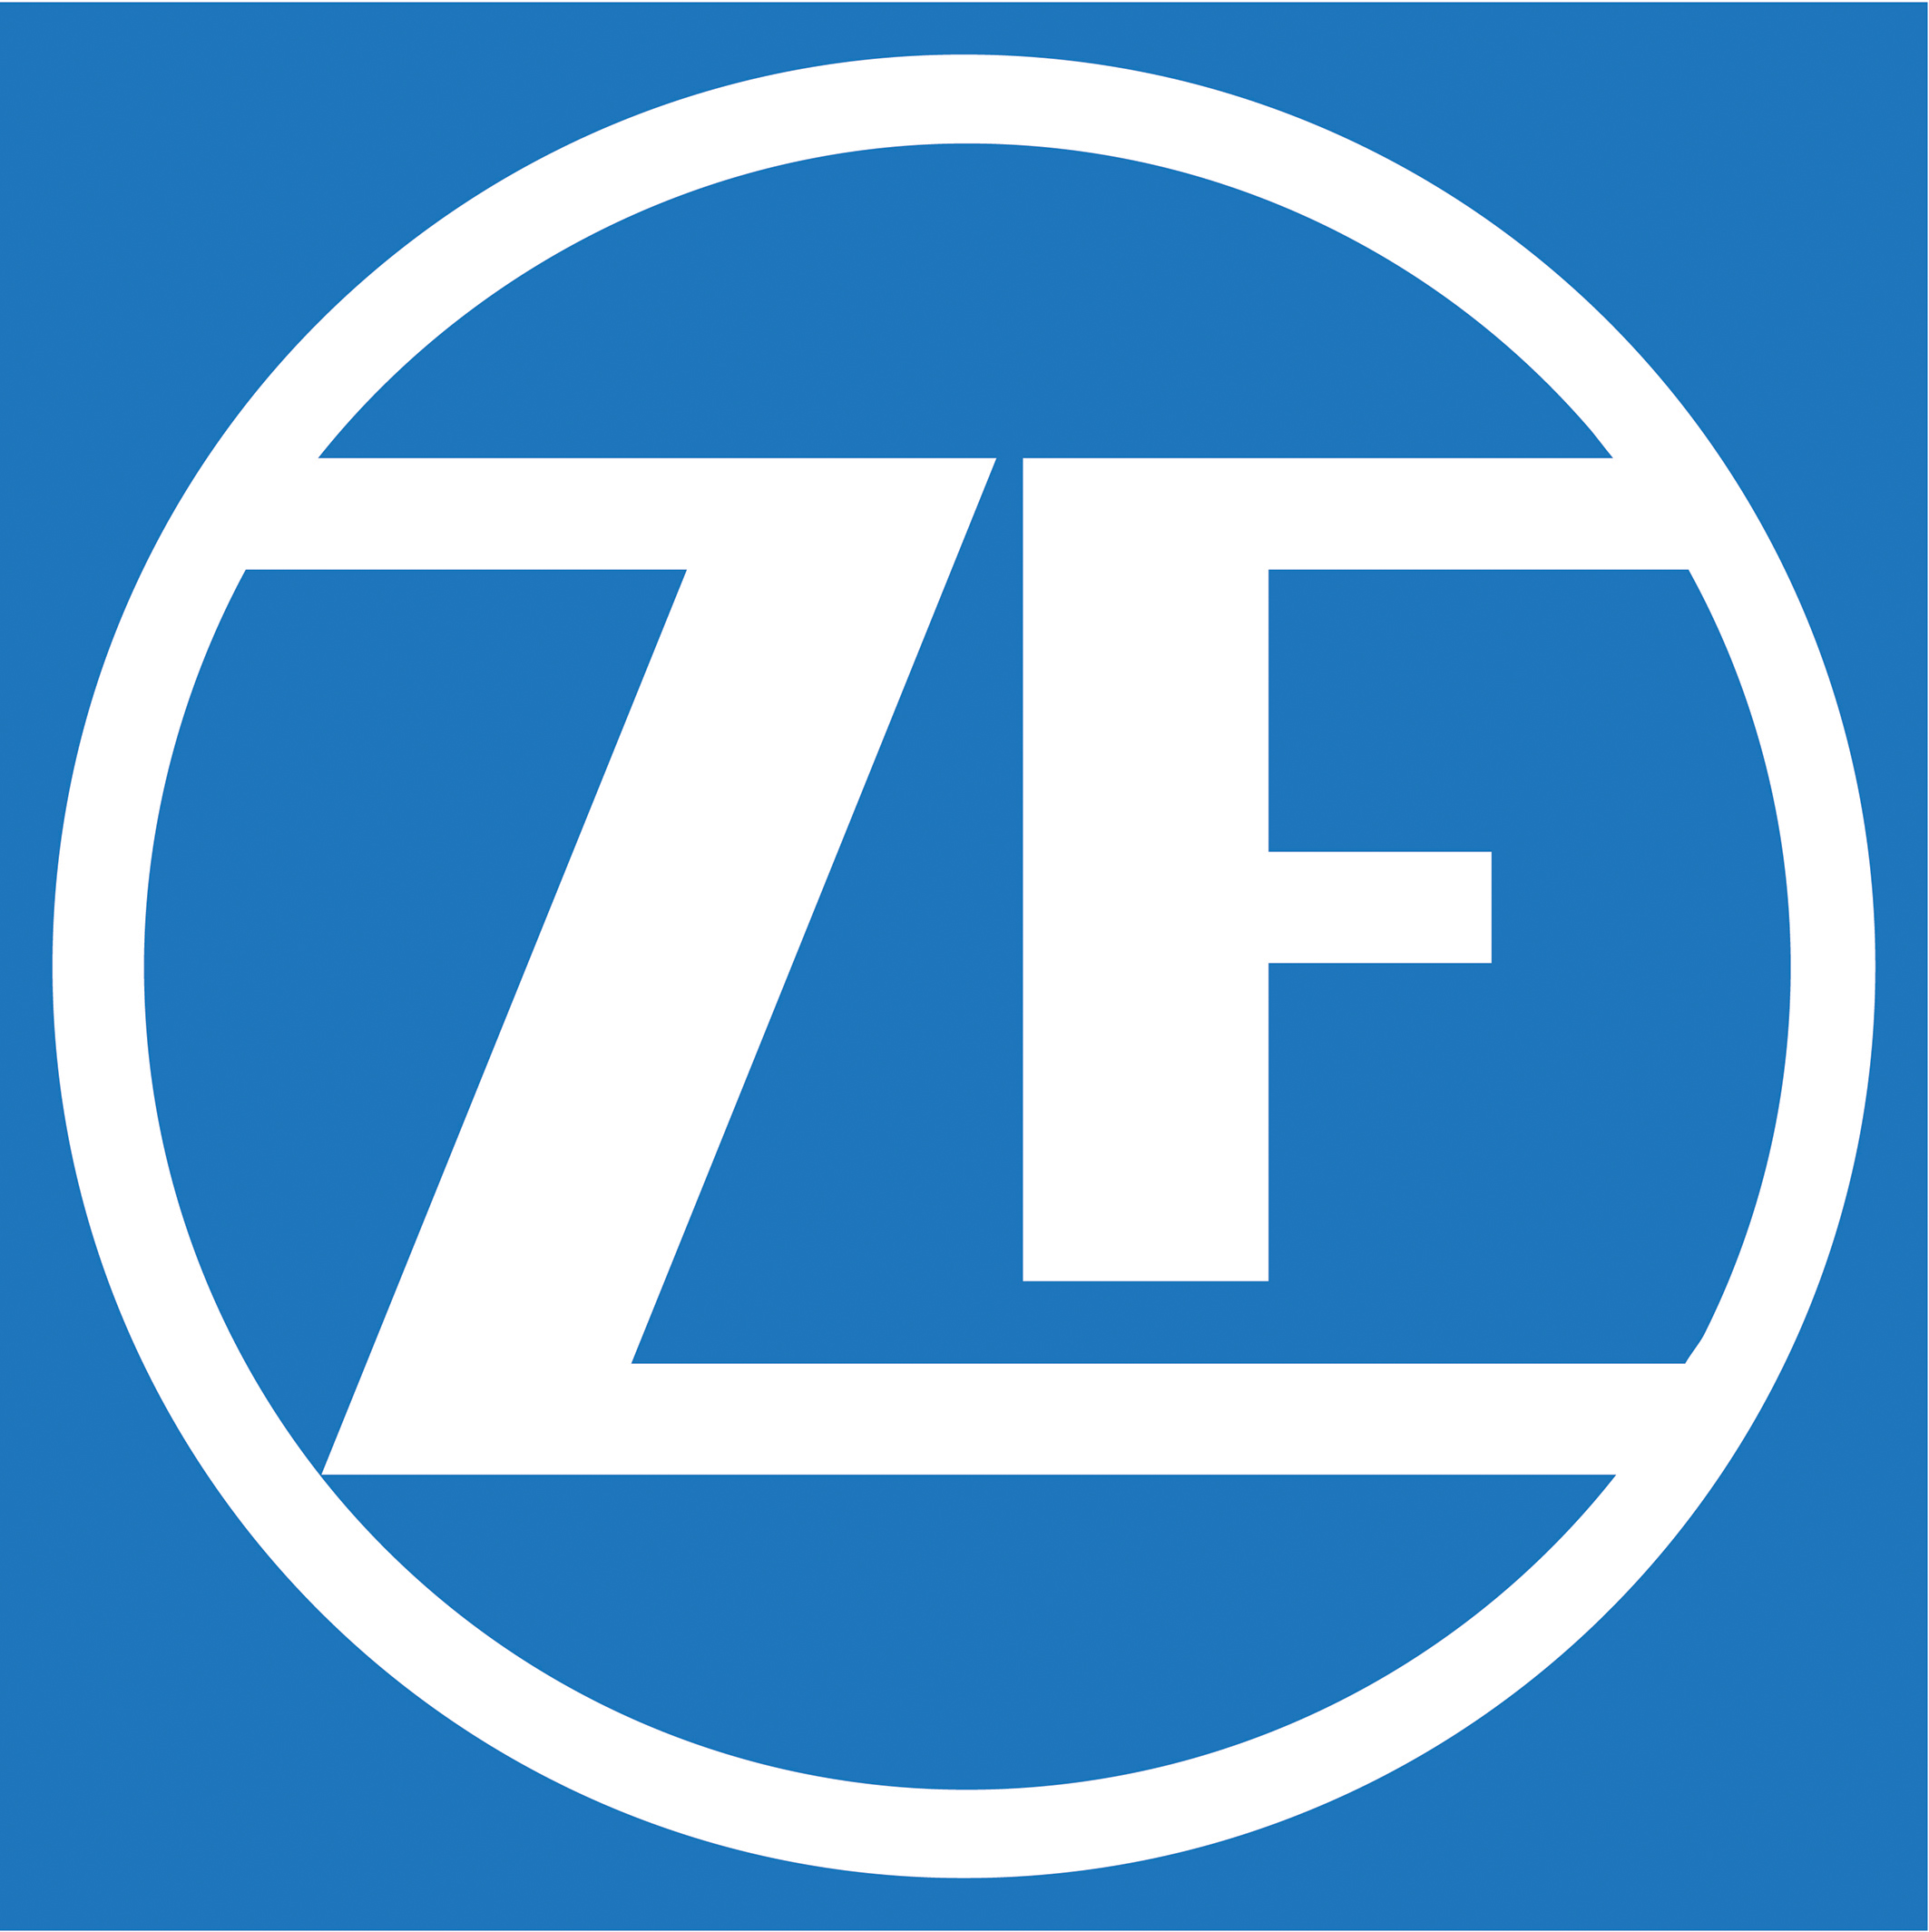 services company logo zf friedrichshafen ag zf